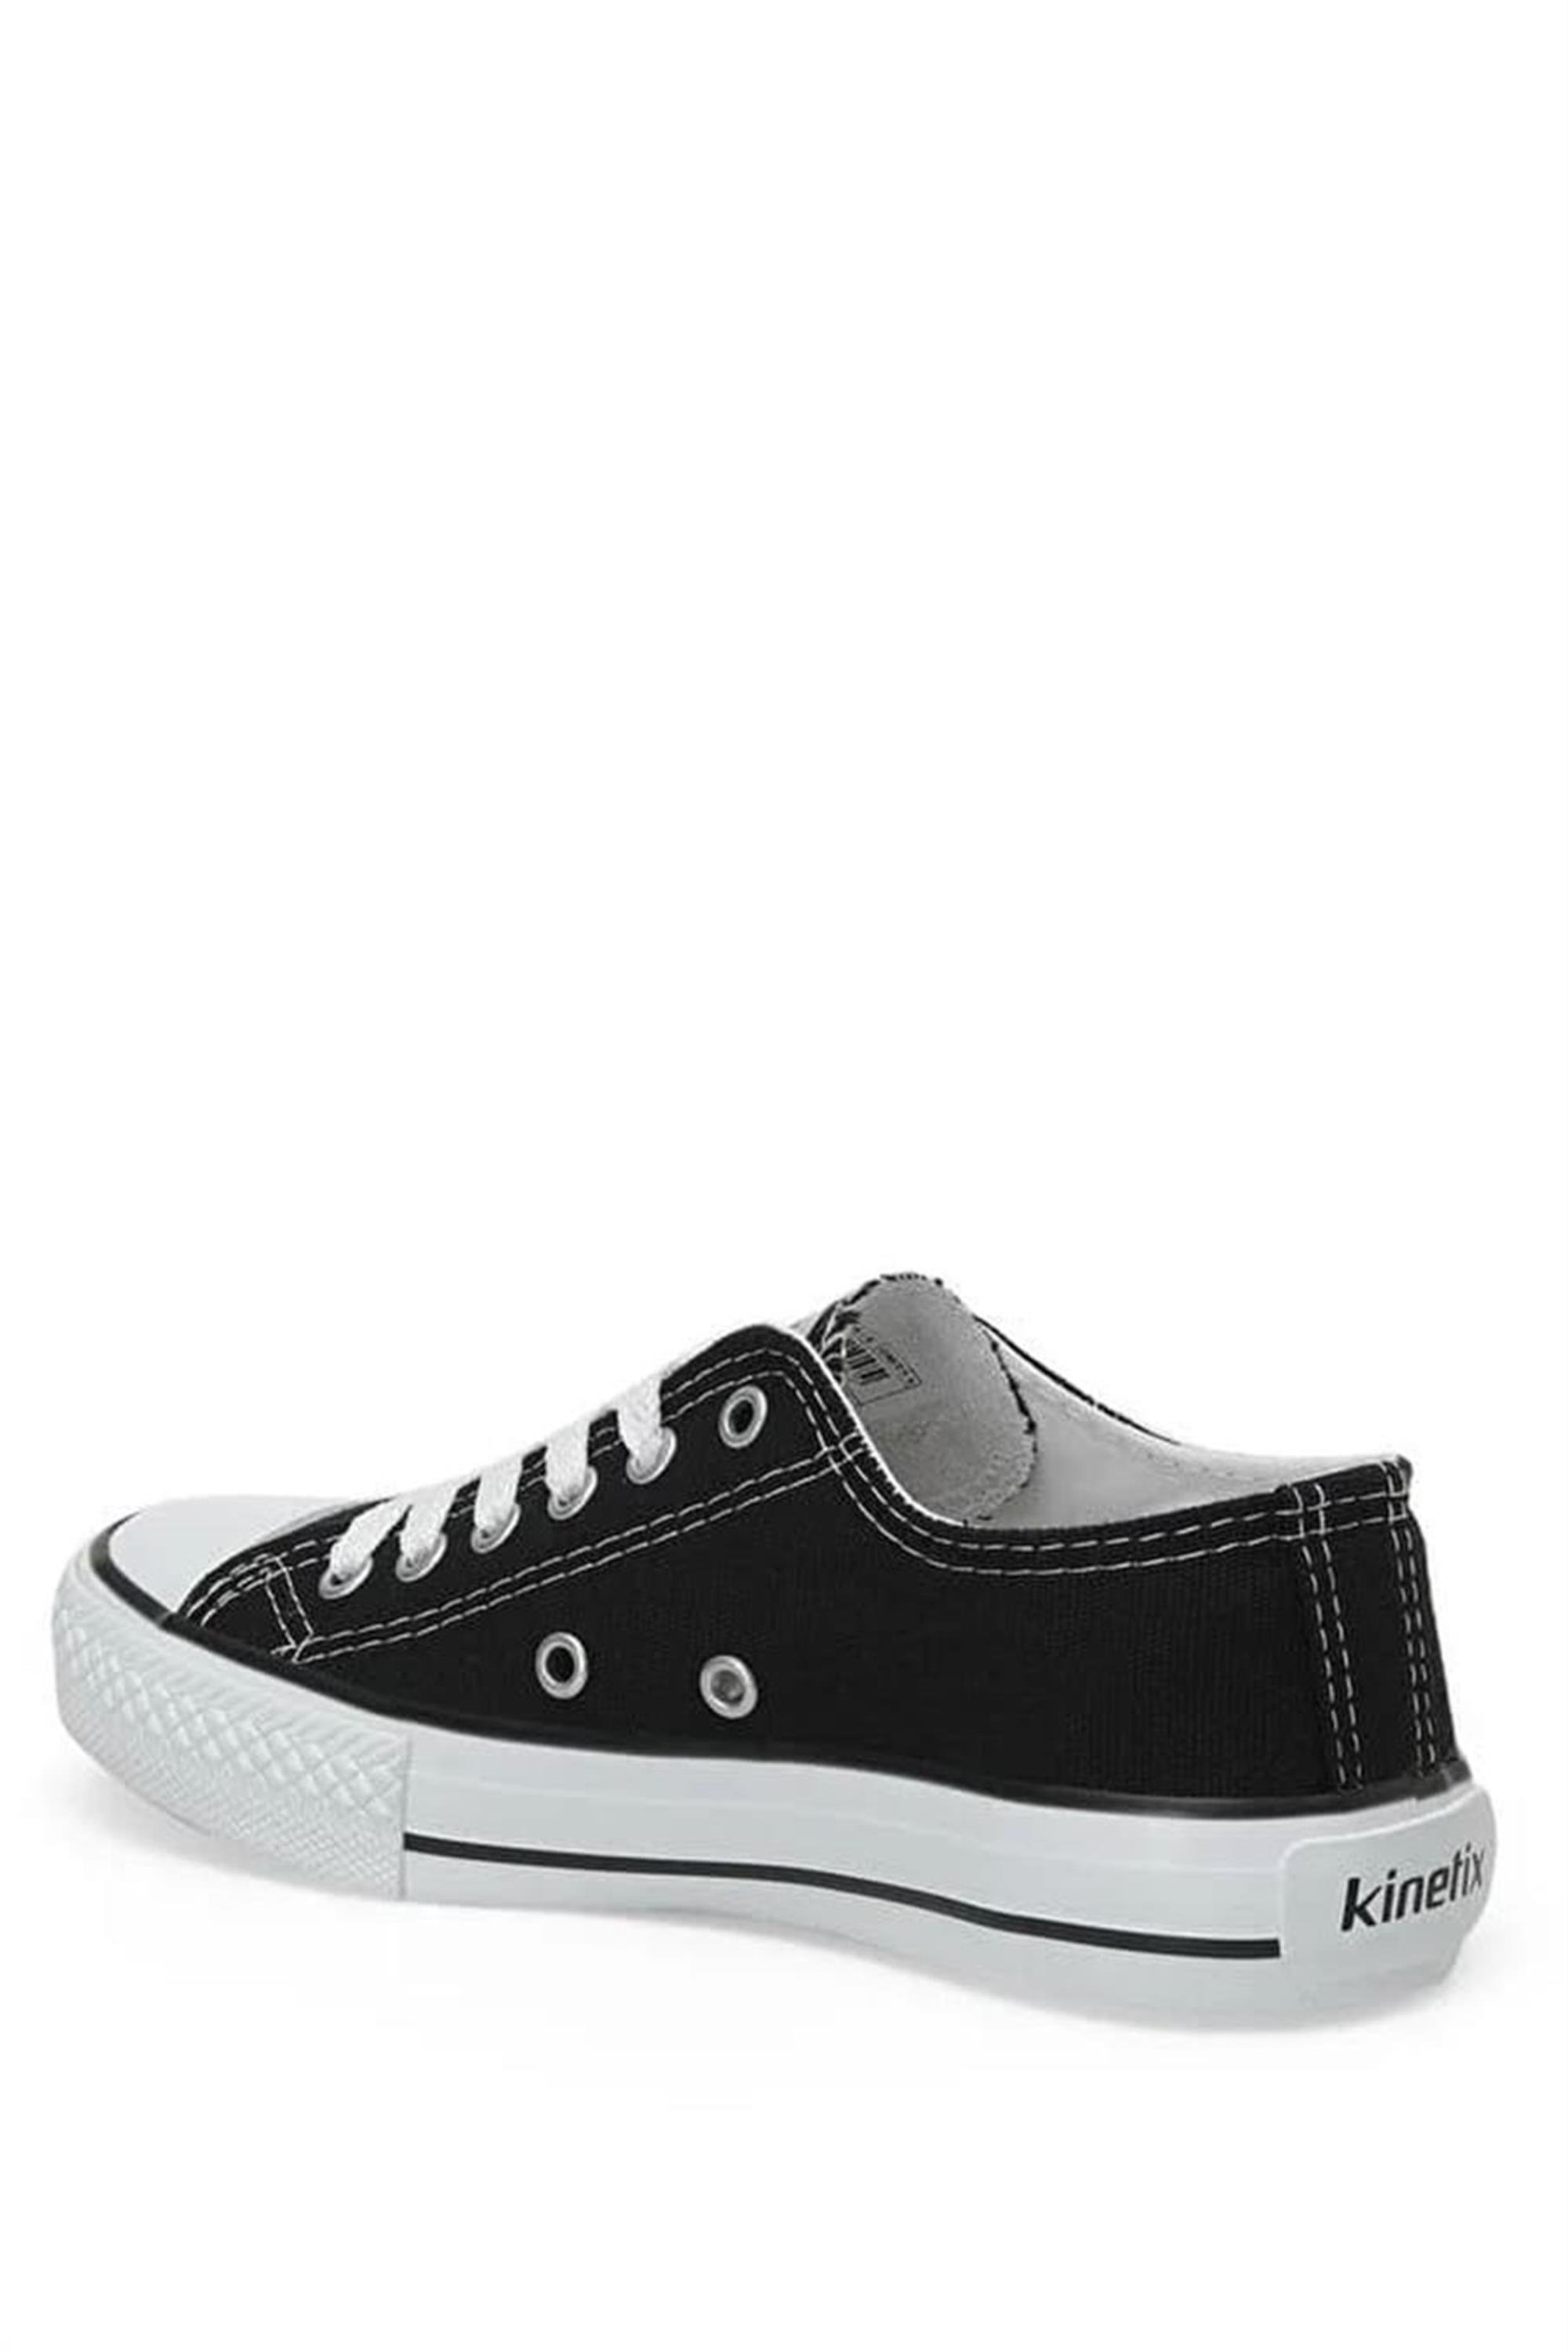 Kinetix Fowler Tx W 3Fx Siyah Kadın Sneaker Ayakkabı